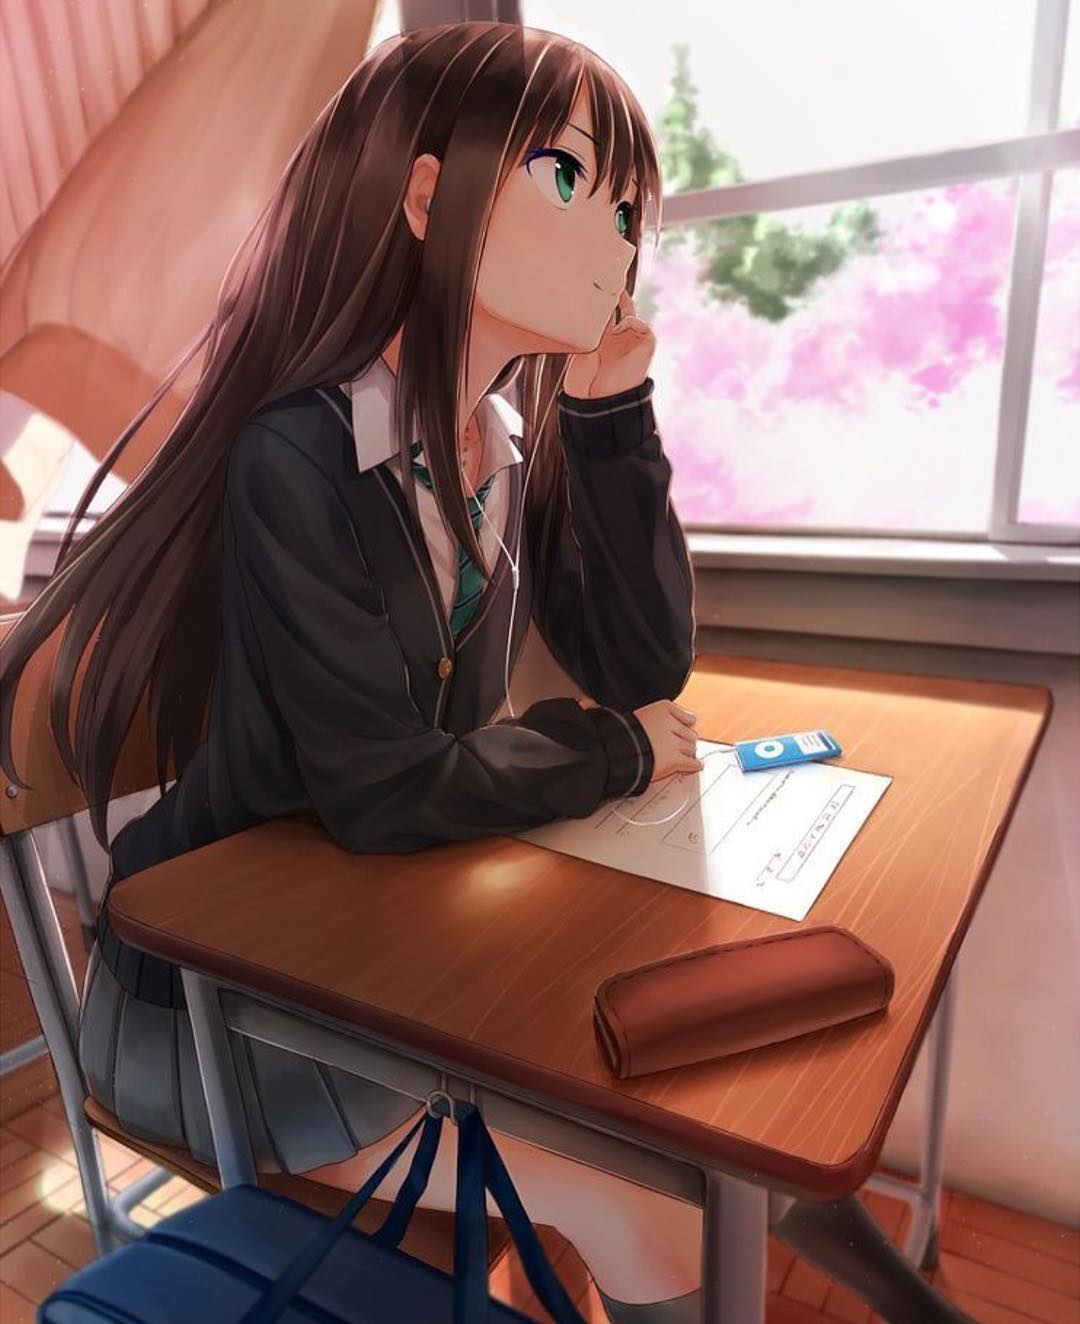 Anime Girl in School wallpaper